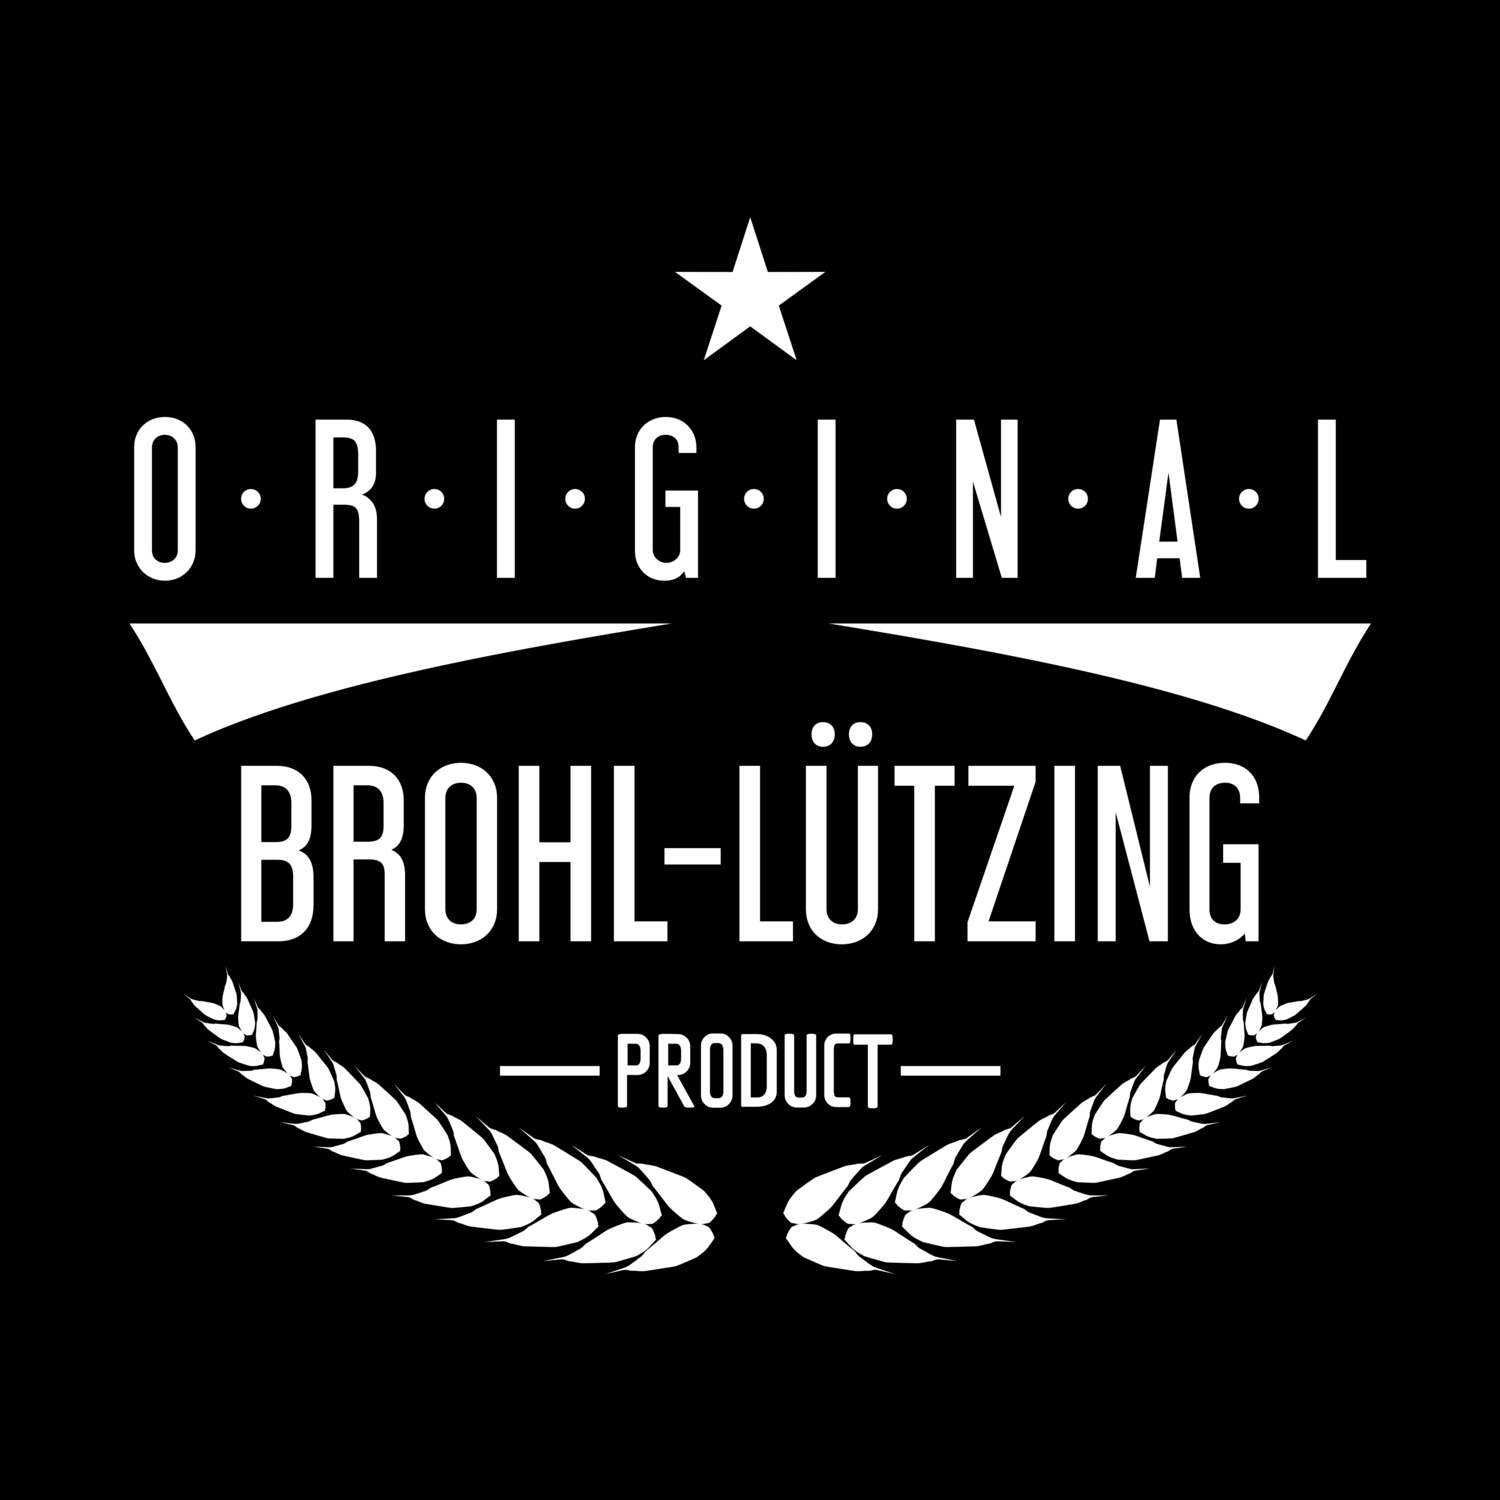 Brohl-Lützing T-Shirt »Original Product«